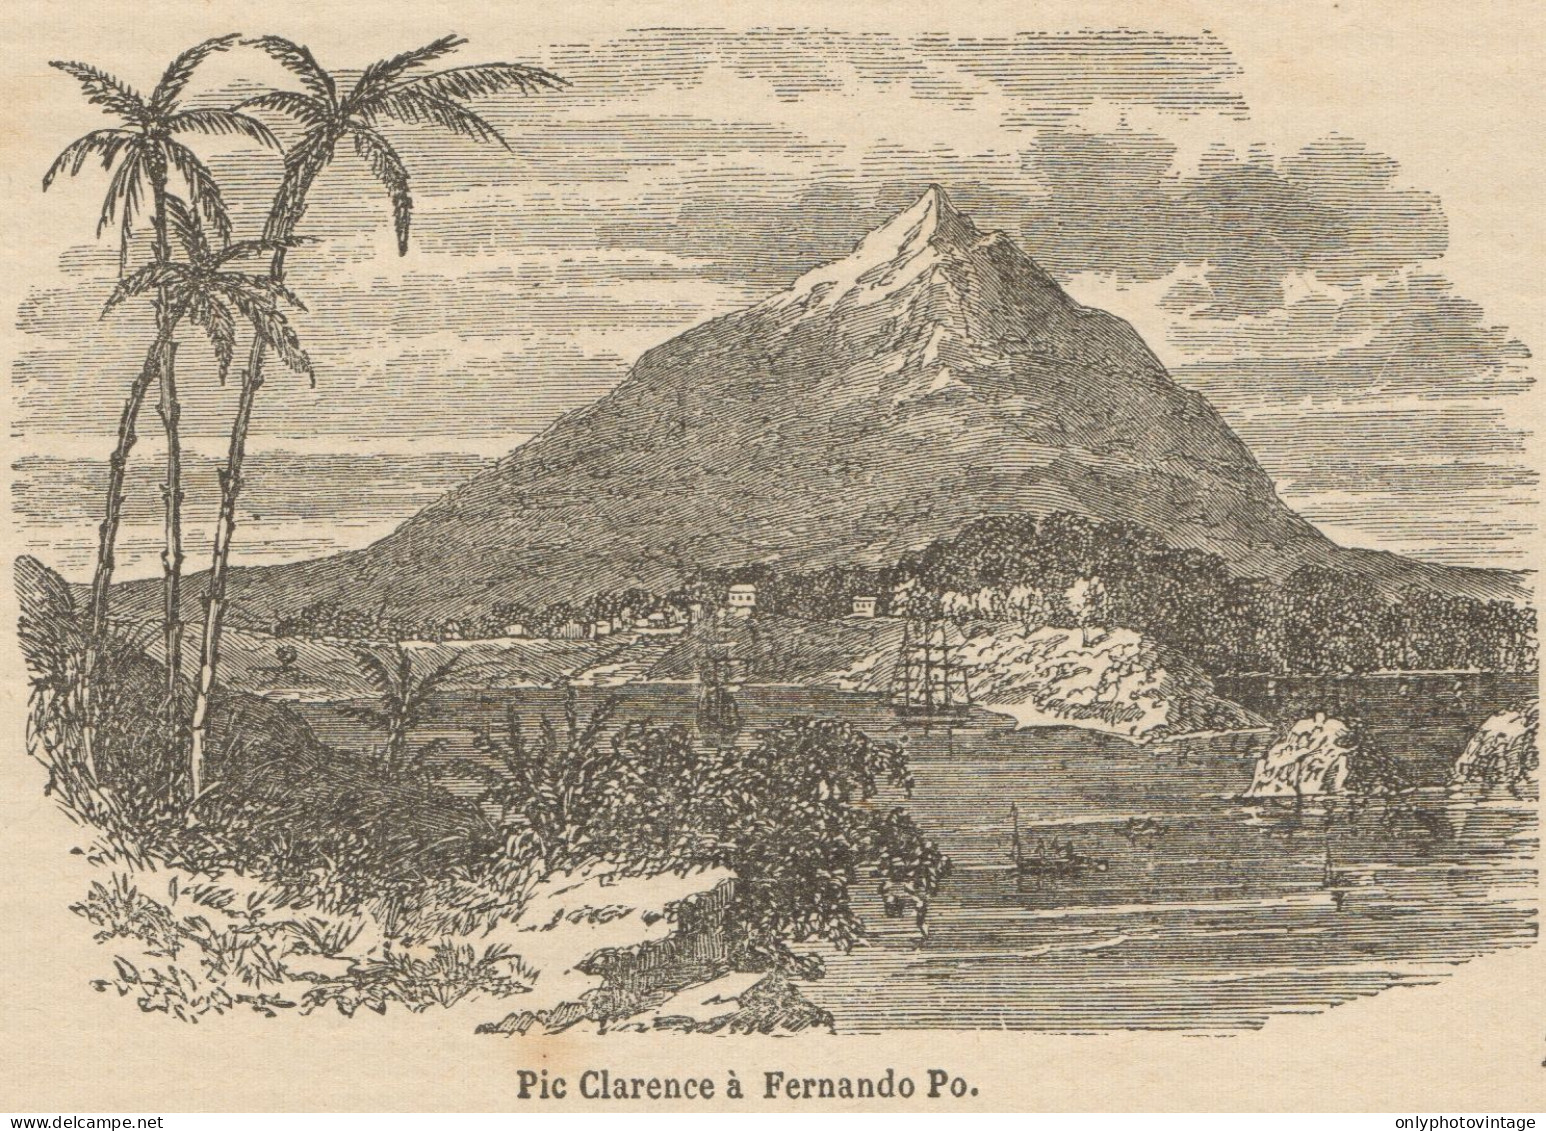 Guinea - Bioko - Fernando Po - View - Stampa Antica - 1892 Engraving - Prints & Engravings